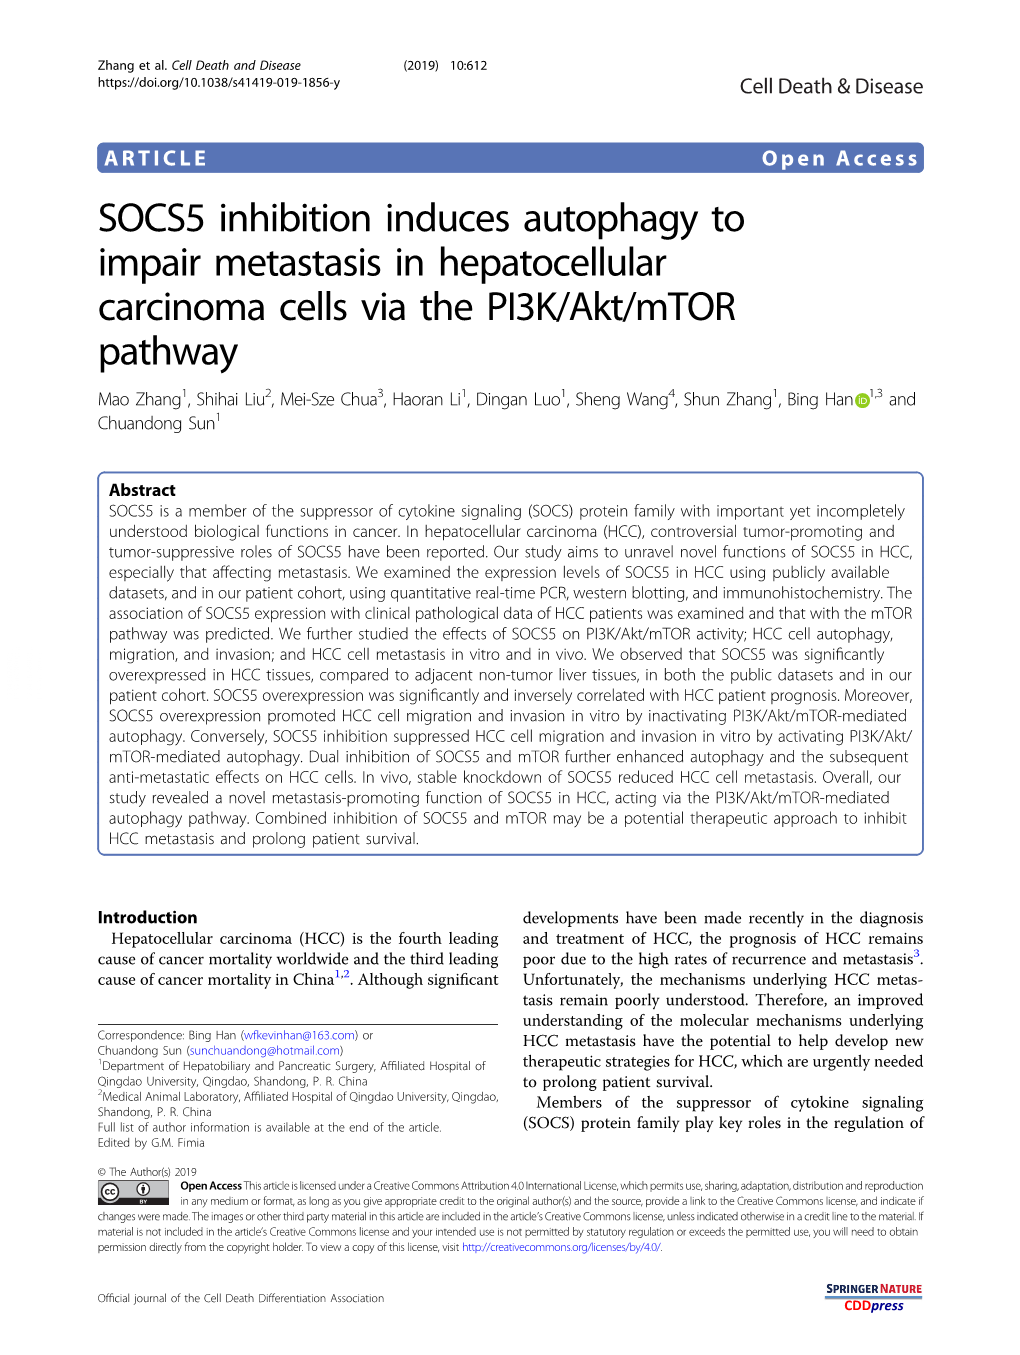 SOCS5 Inhibition Induces Autophagy to Impair Metastasis In